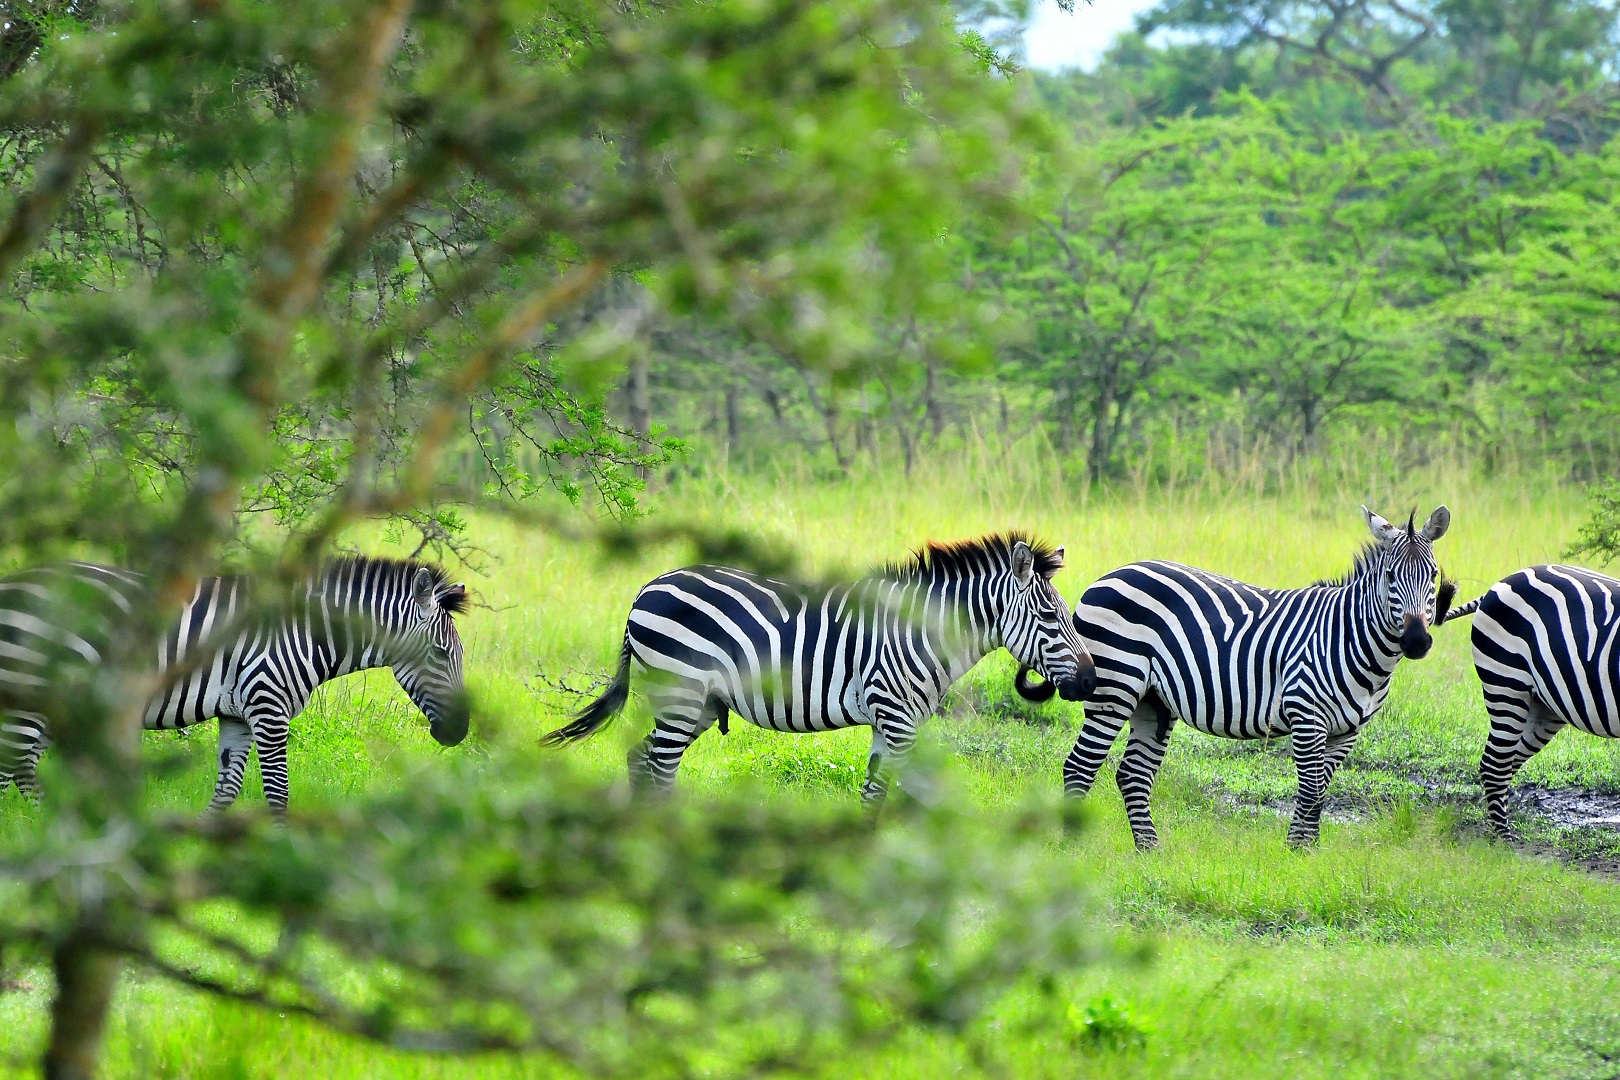 15 Days wildlife Uganda safari, gorilla & chimpanzee trekking tour 